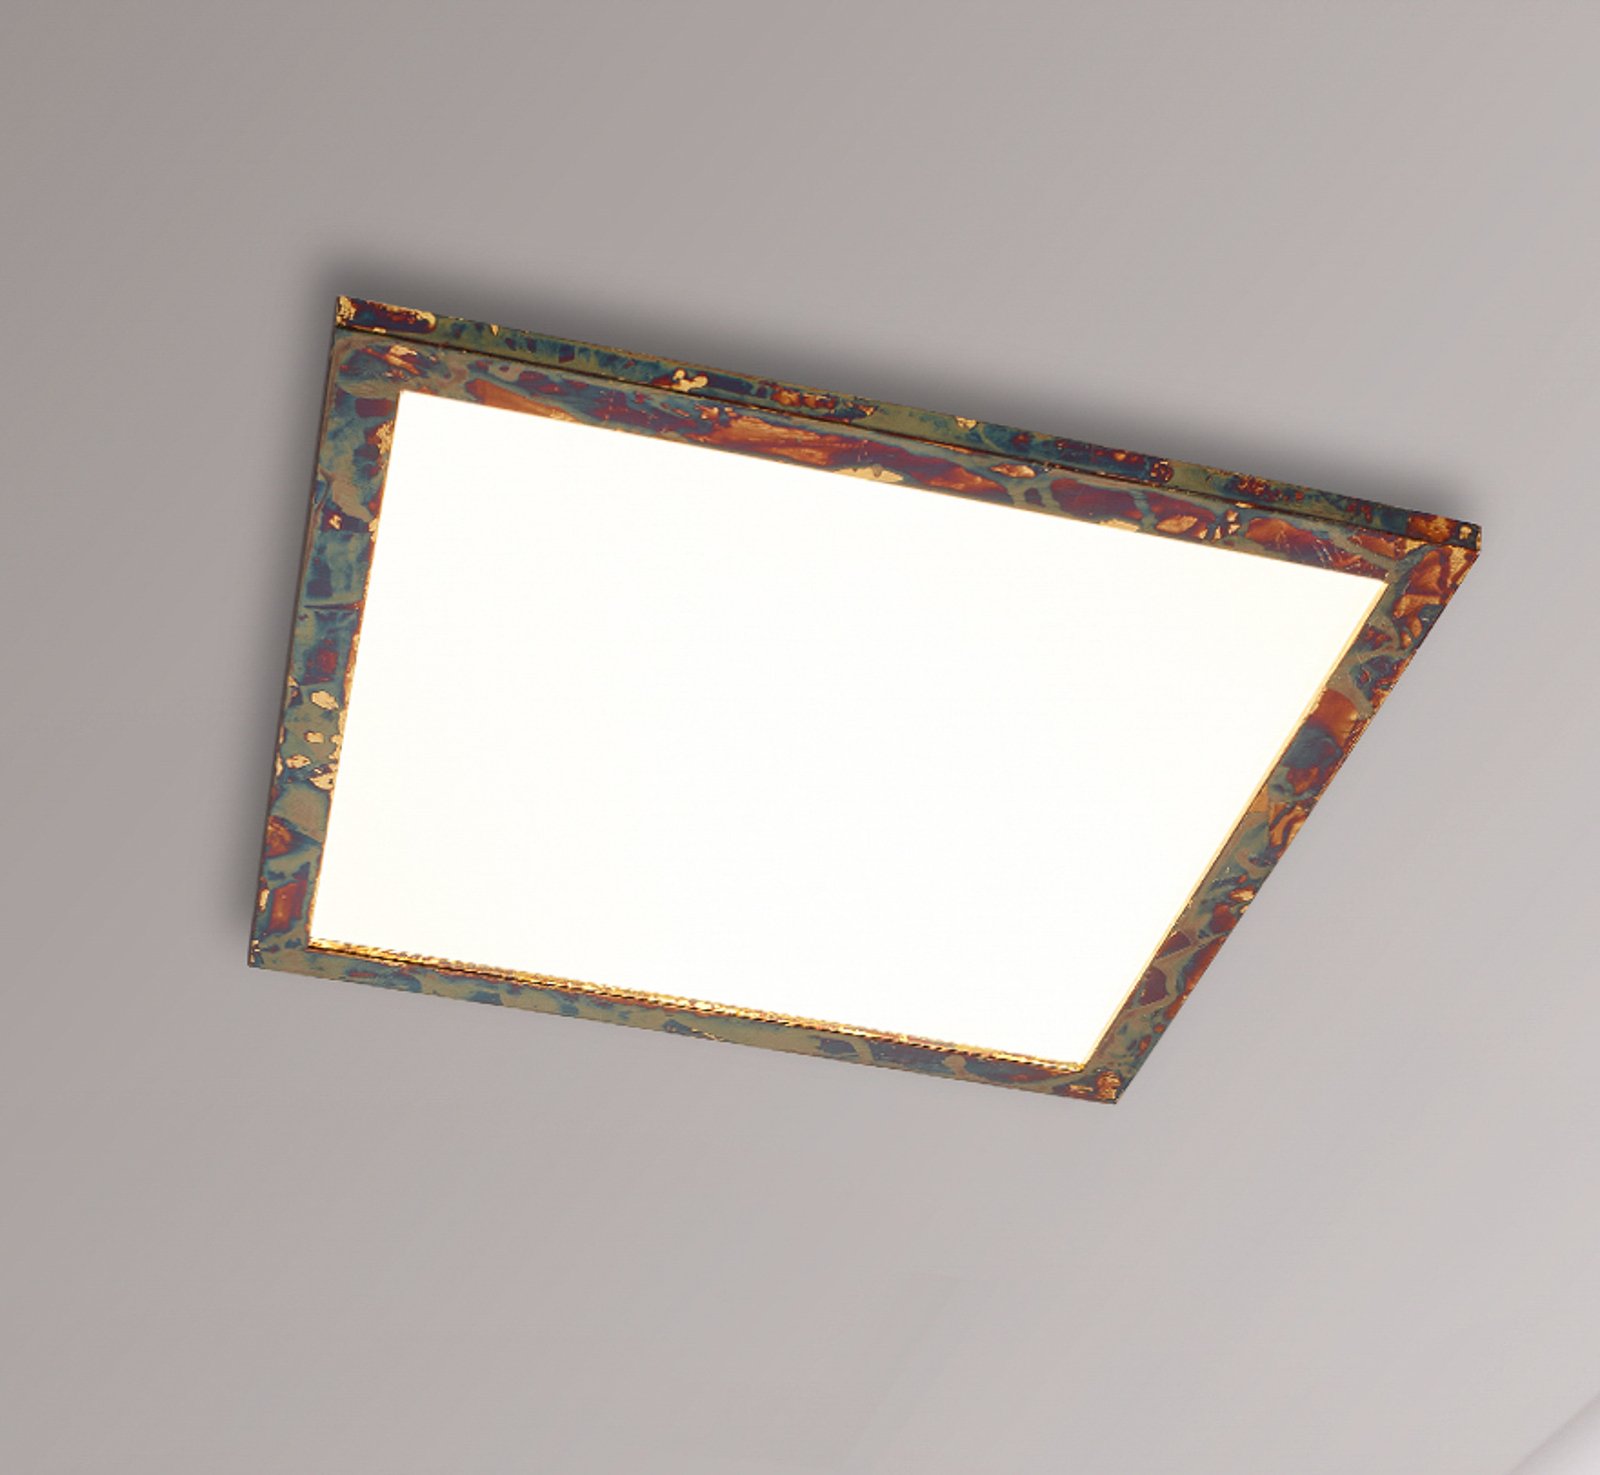 Quitani Aurinor LED-panel, gullfarget, 68 cm